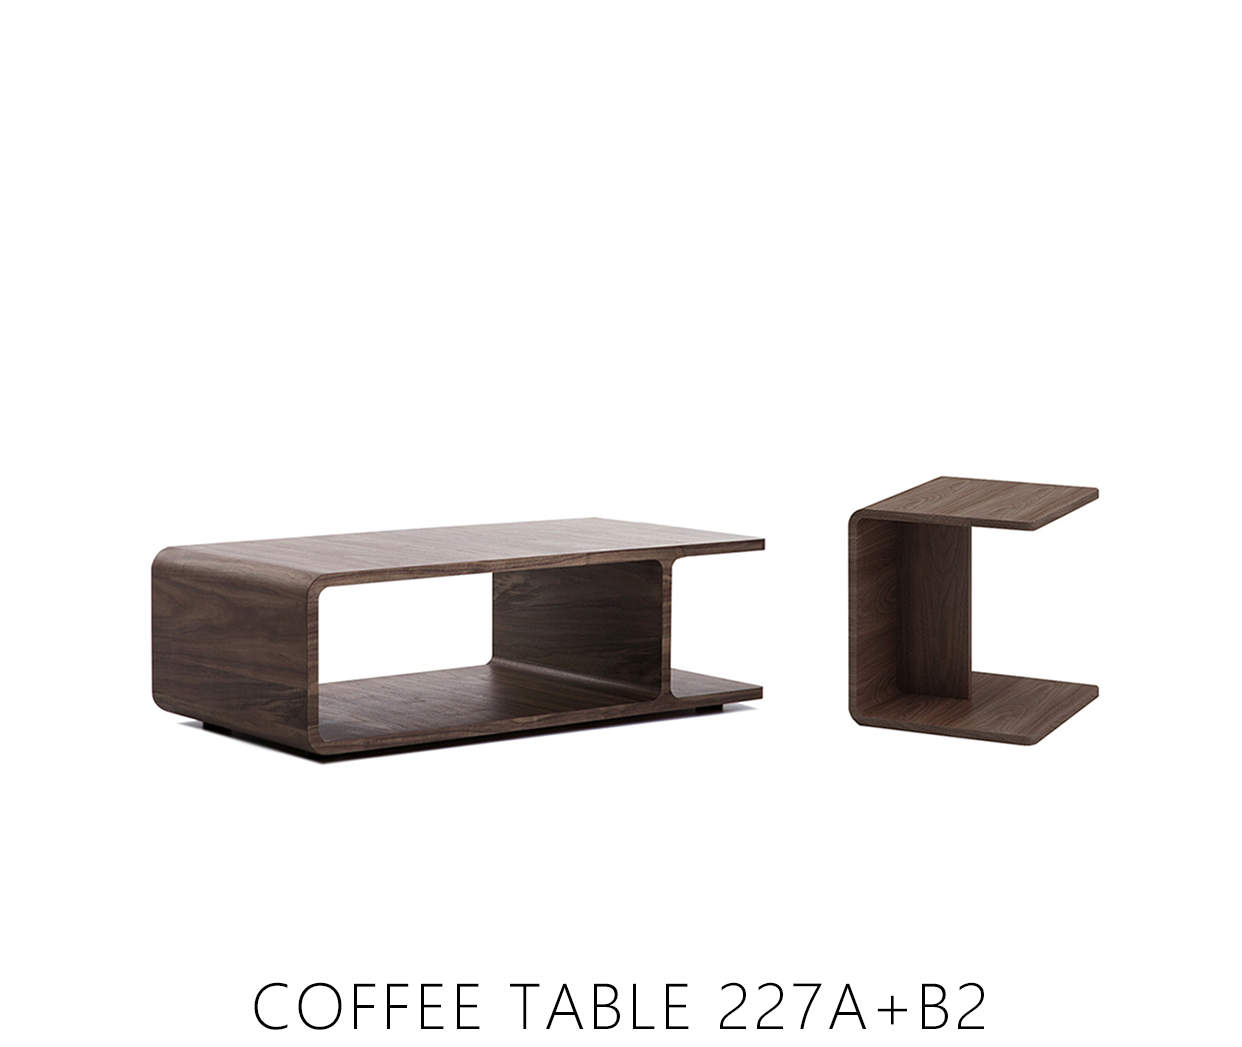 COFFEE TABLE 227A+B2 